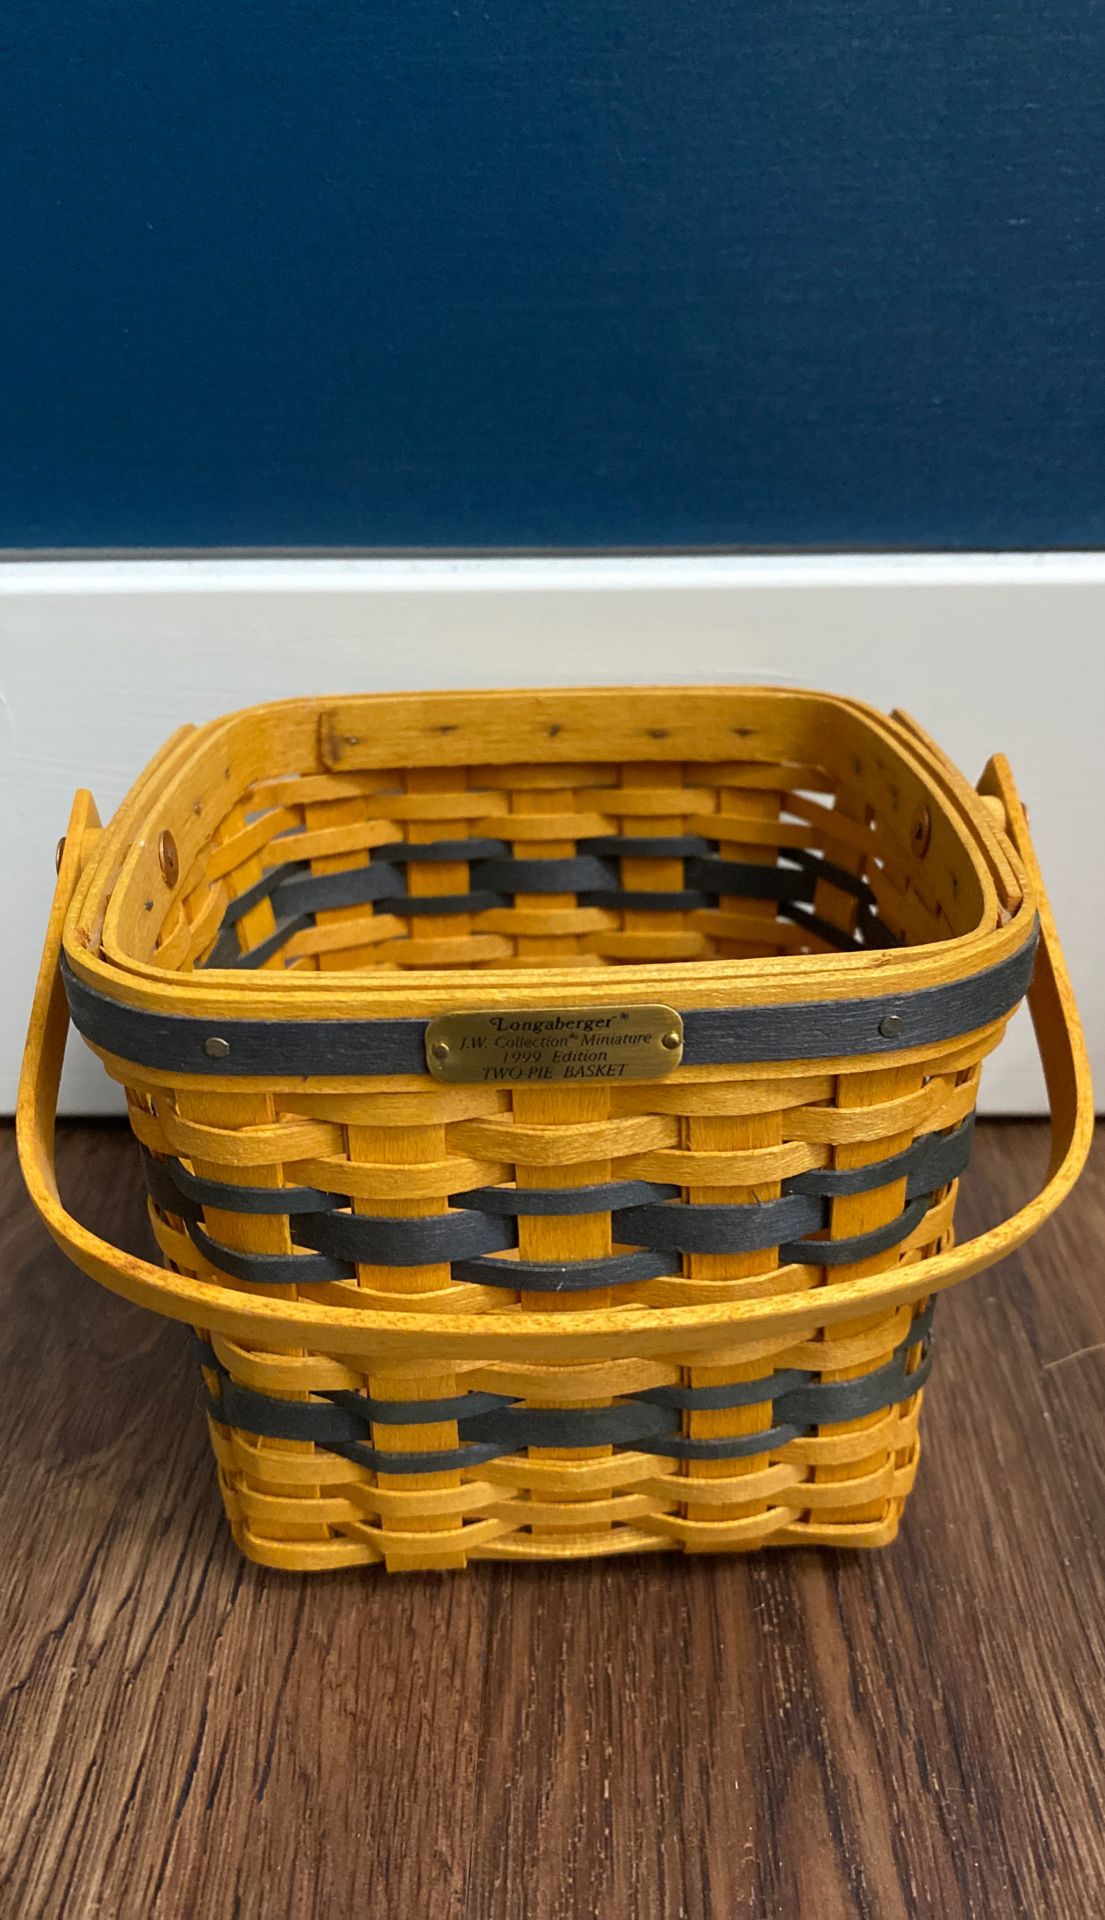 Longaberger collectors basket